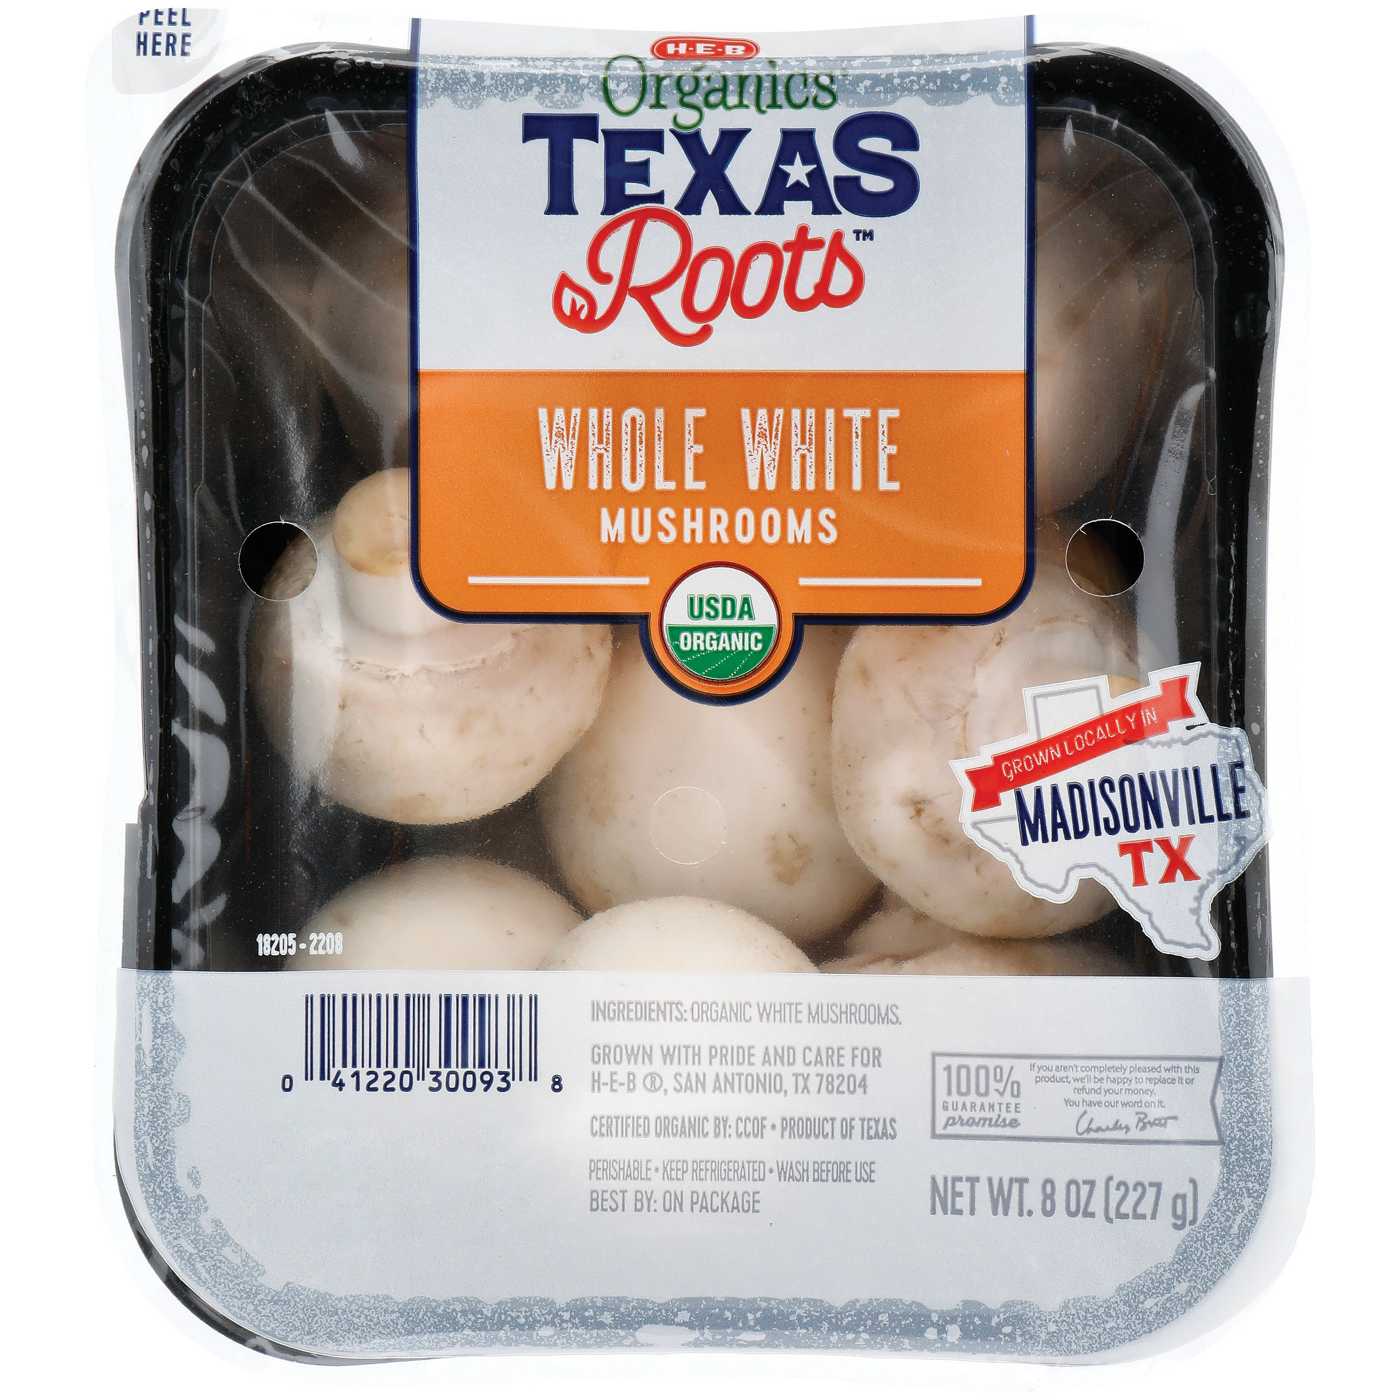 H-E-B Organics Texas Roots Whole White Mushrooms; image 1 of 4